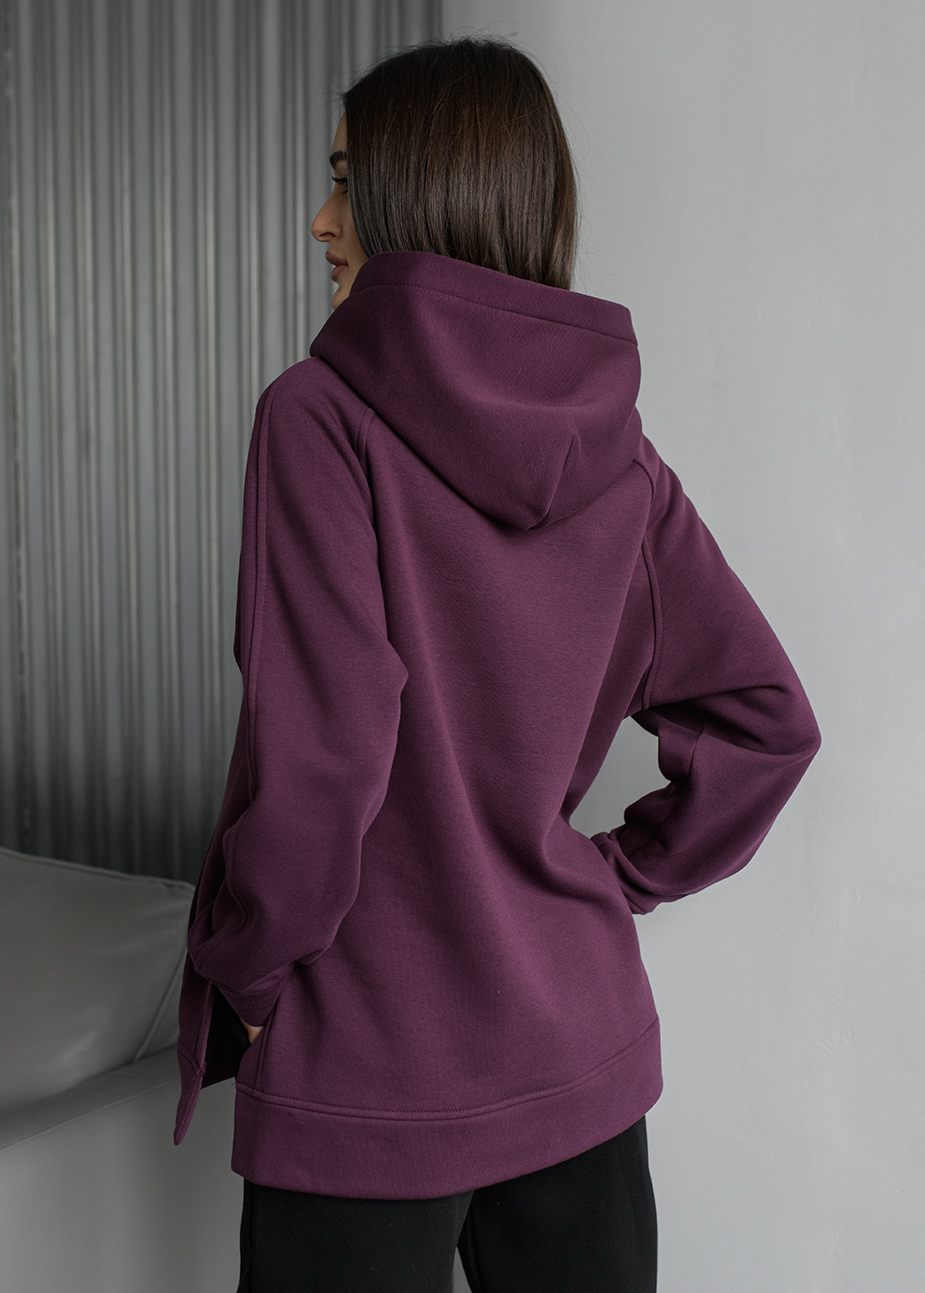 Bluza Staff dark purple oversize fleece